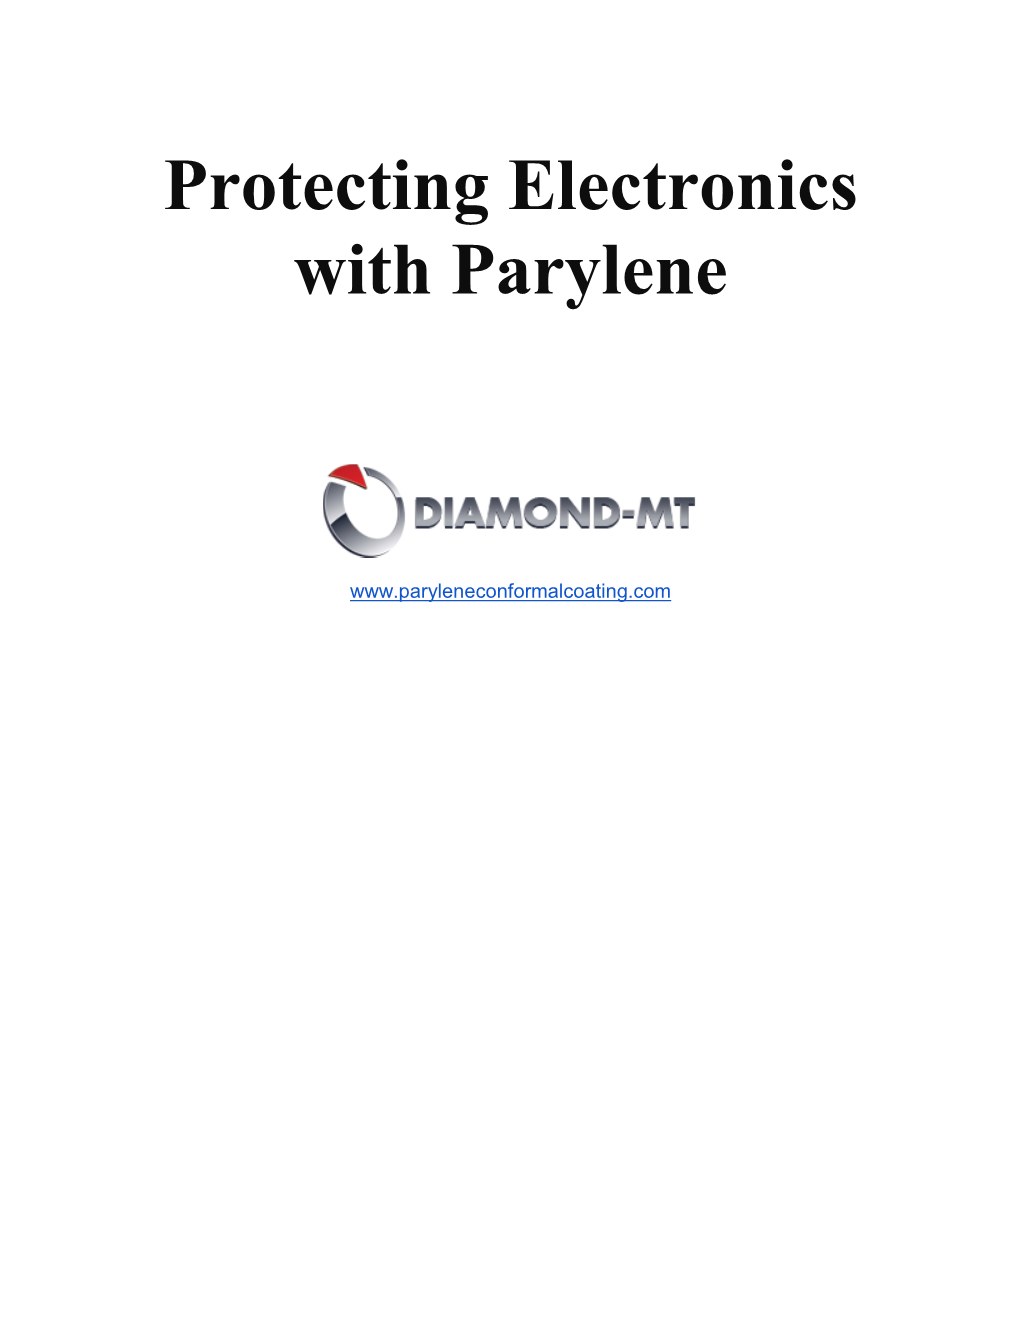 Protecting Electronics with Parylene